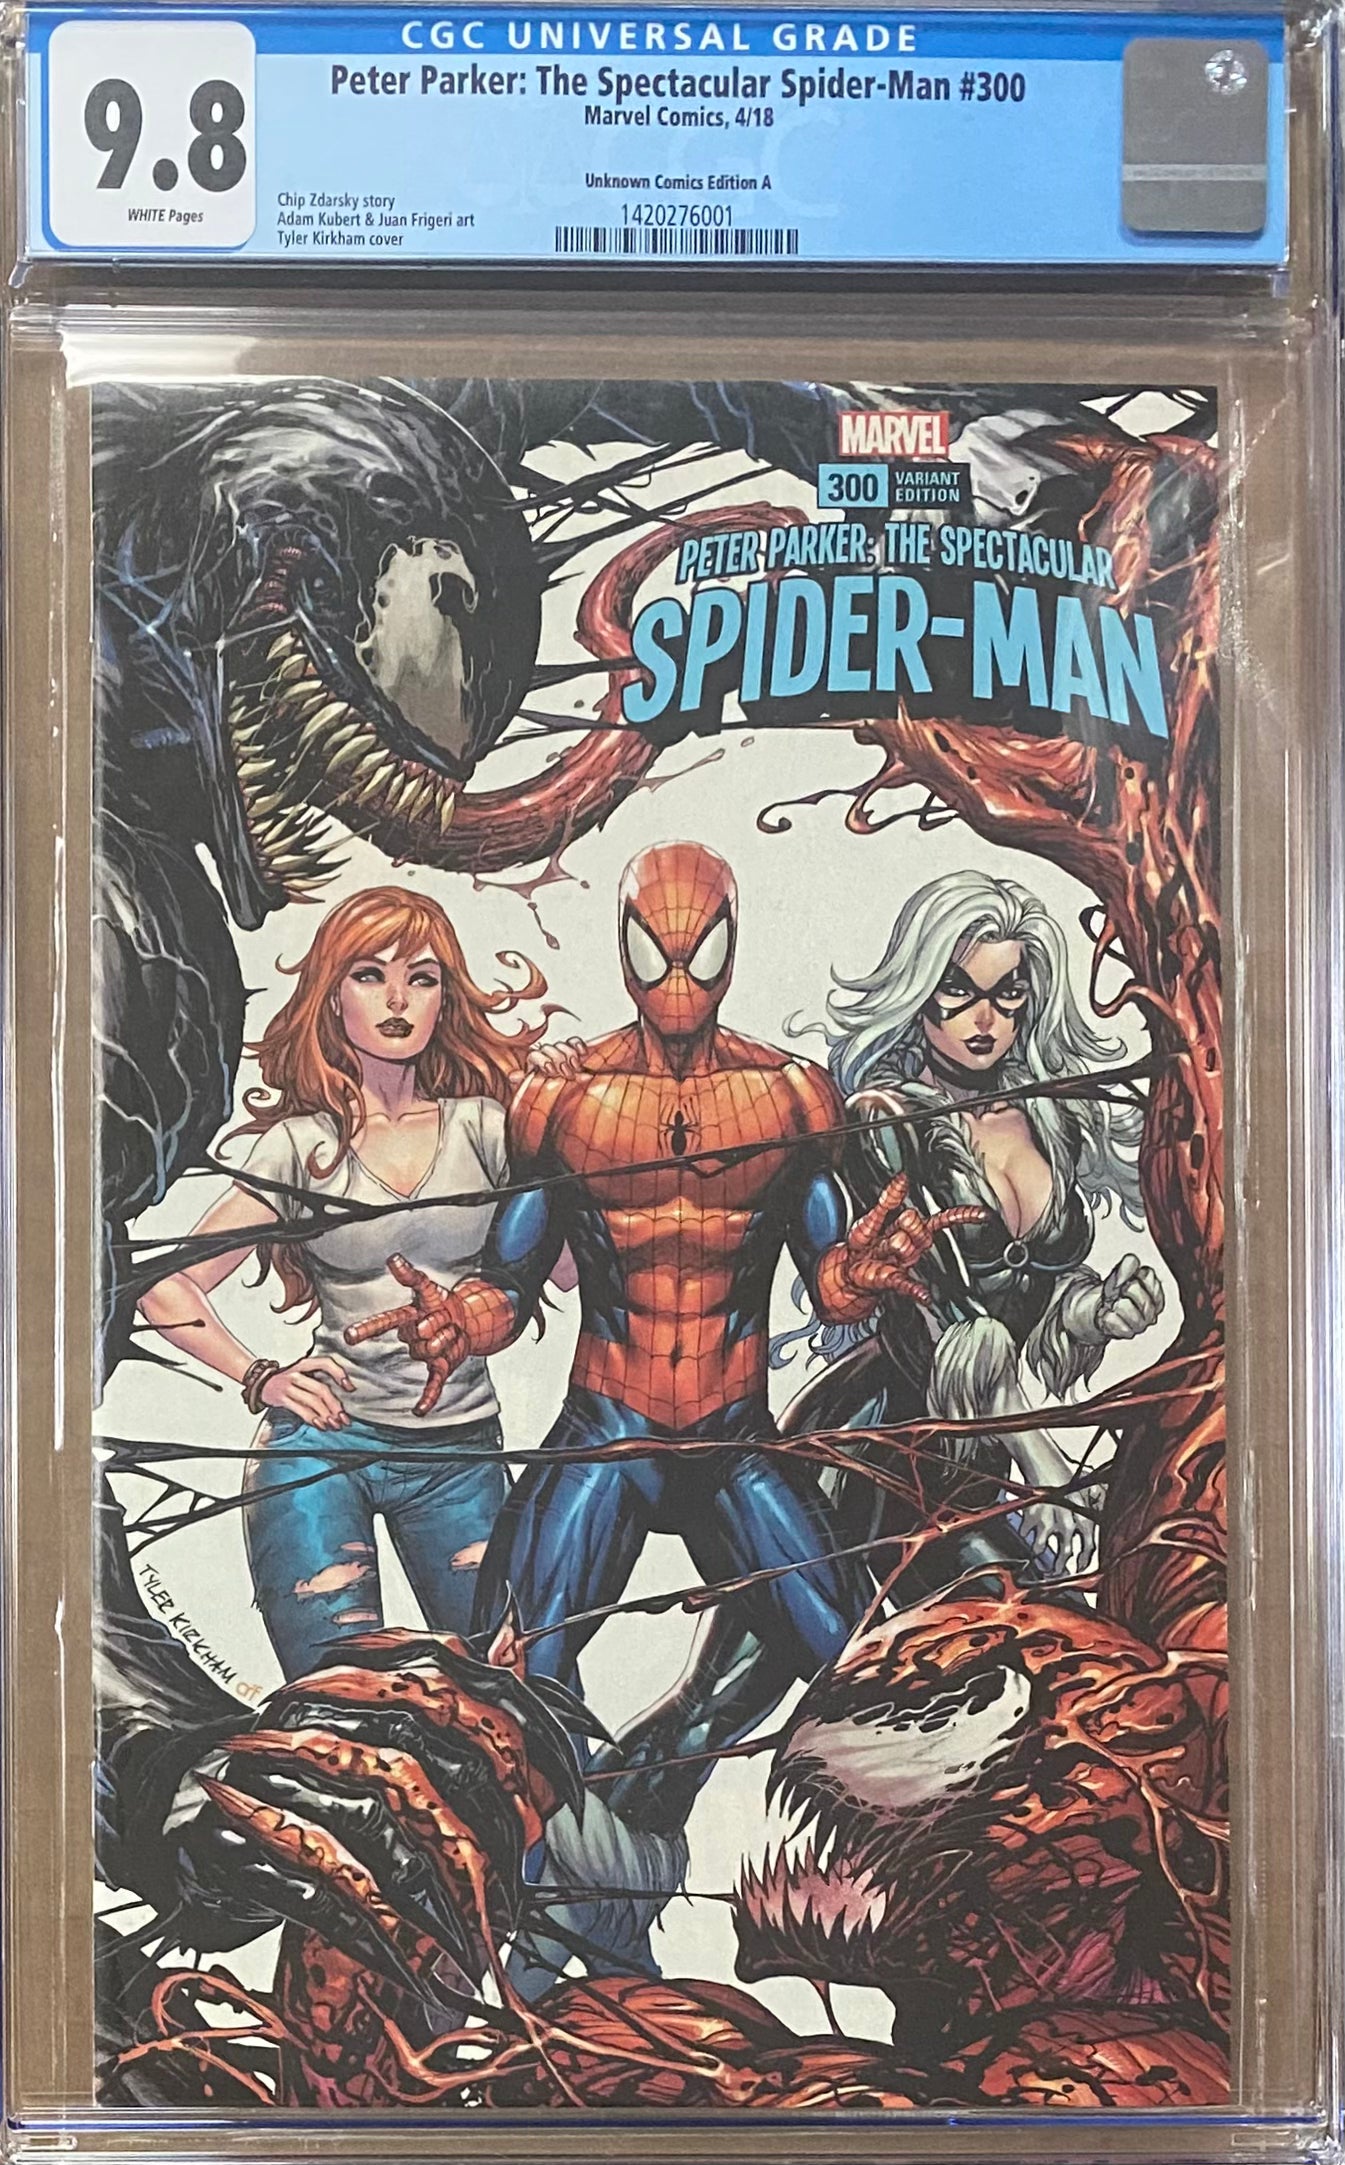 AMAZING SPIDER-MAN #1 (TYLER KIRKHAM EXCLUSIVE VARIANT) Comic Book